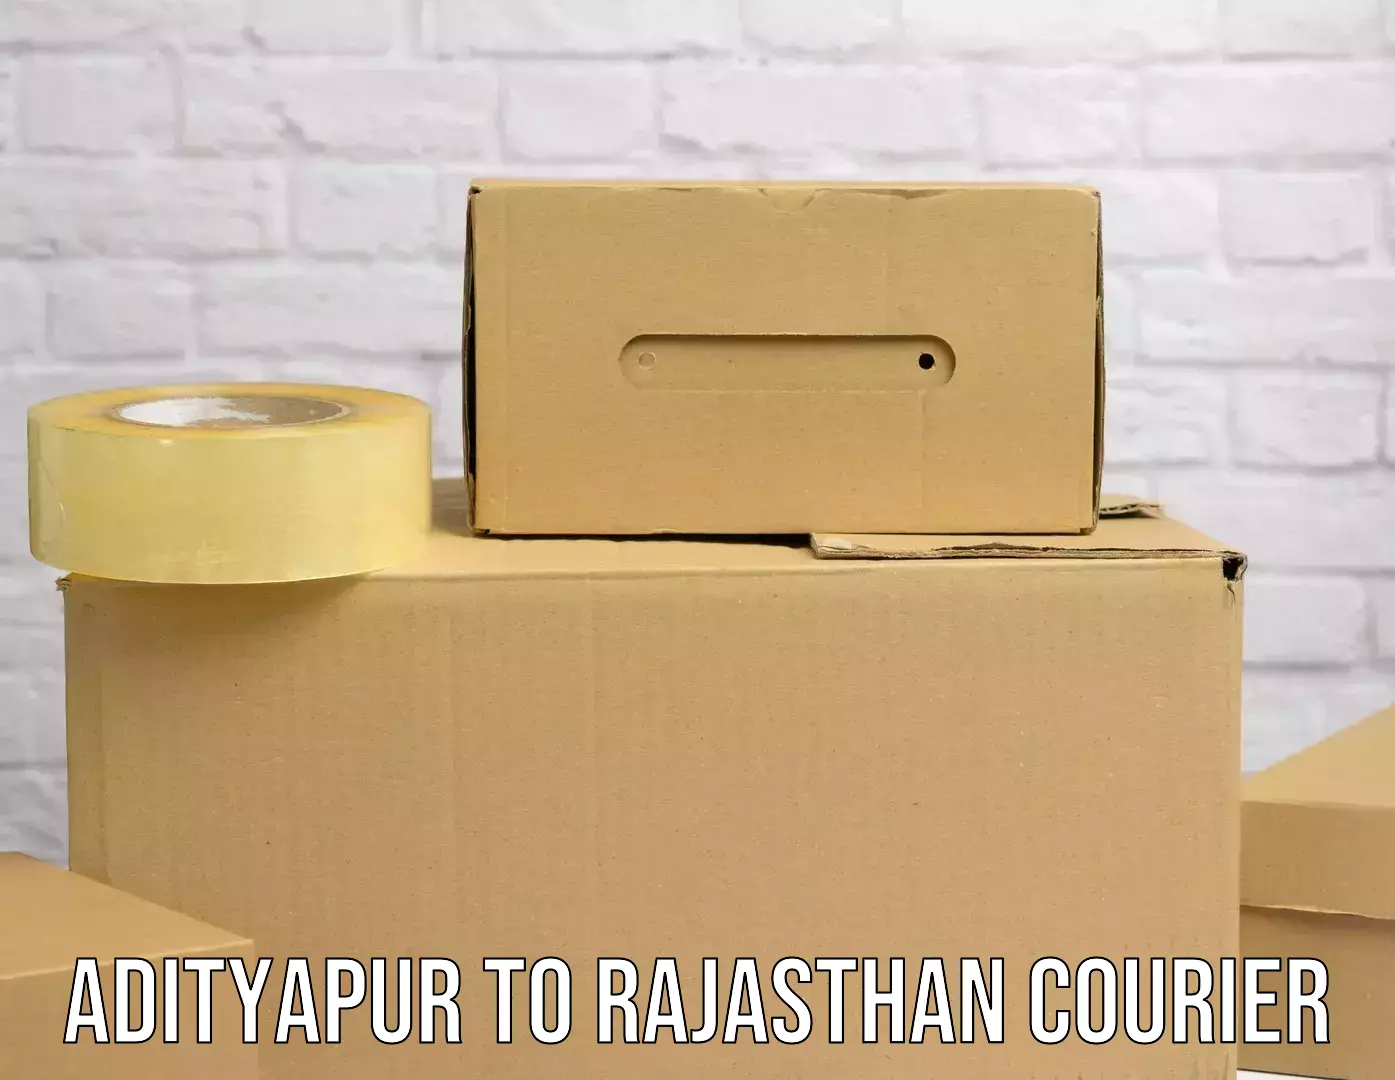 Express package handling Adityapur to Rajasthan